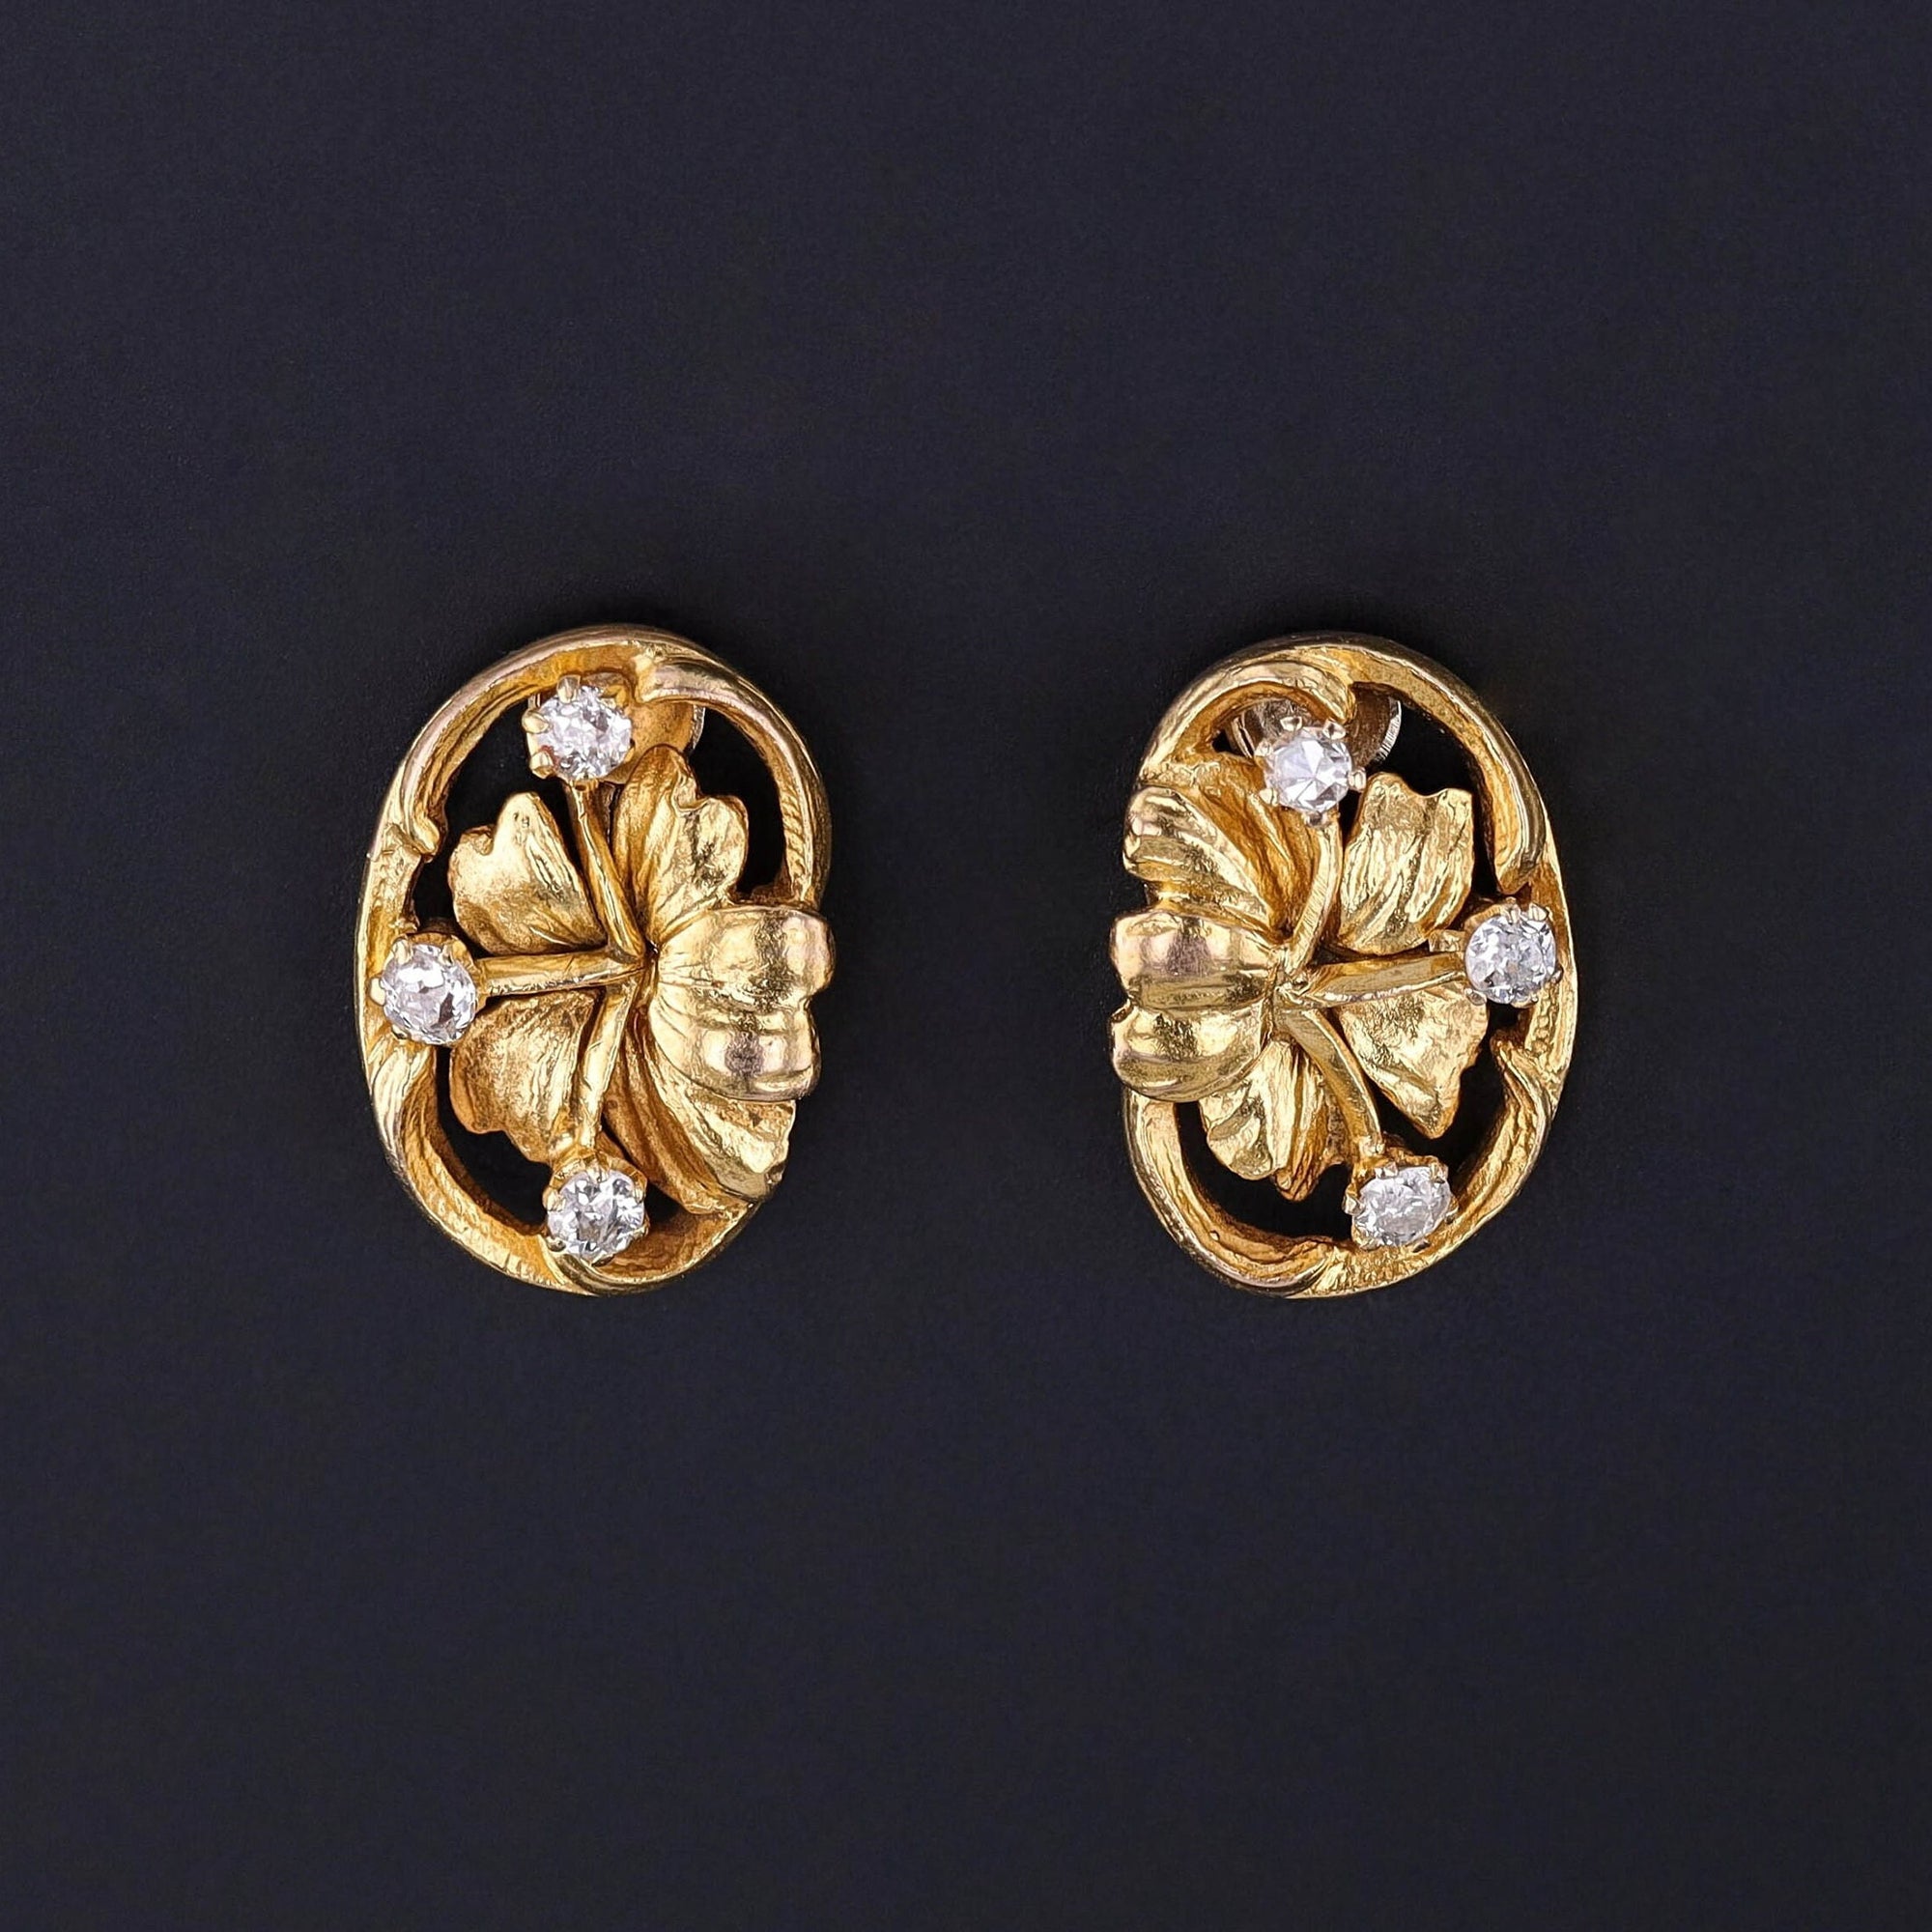 Antique Diamond Flower Conversion Earrings of 14k Gold